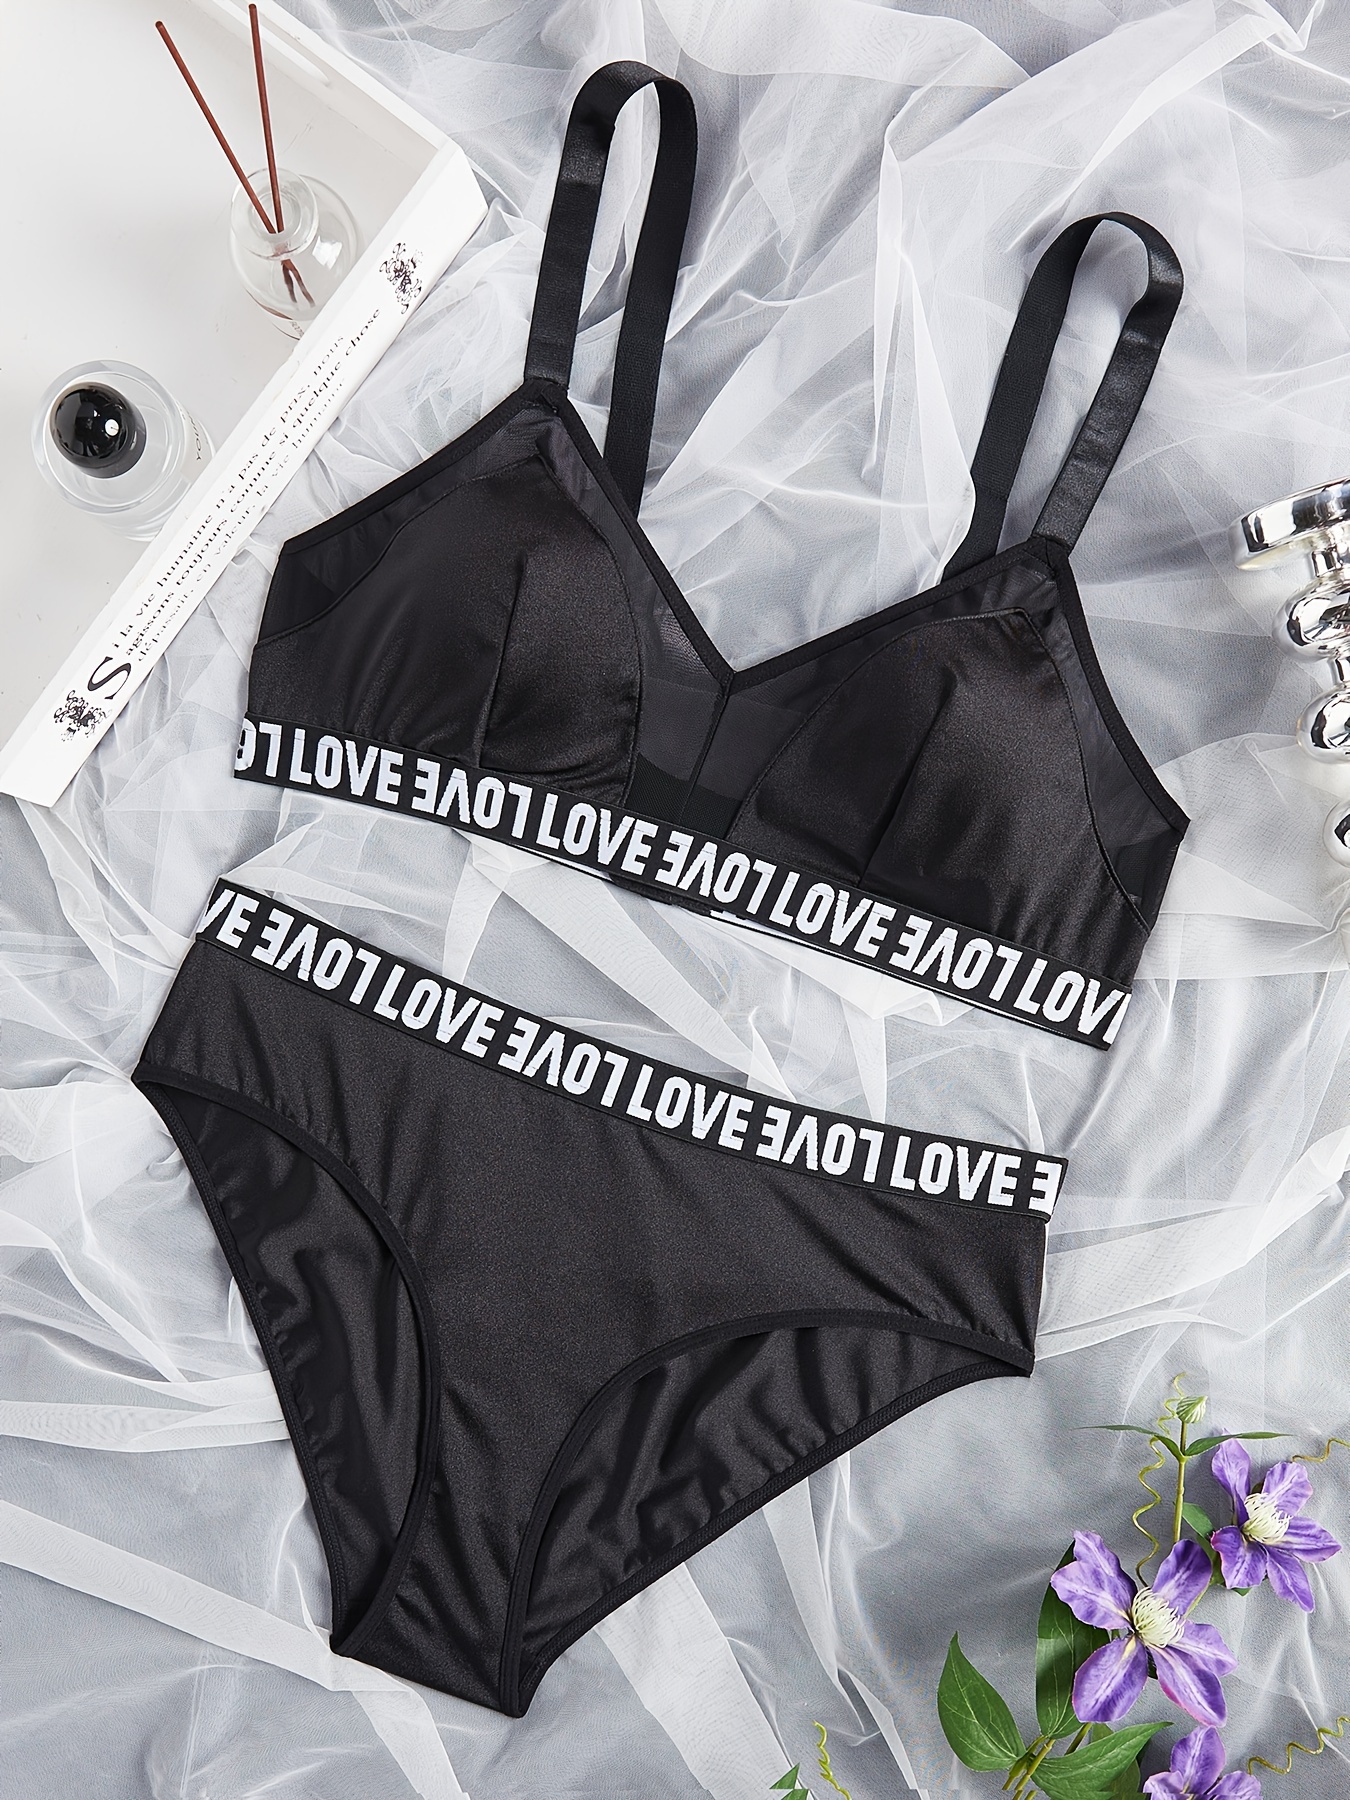 Chic Lover Plus Size Lingerie Set for Women Mesh Black Lace Bra High Waist  Suspender 2 Pieces Underwear